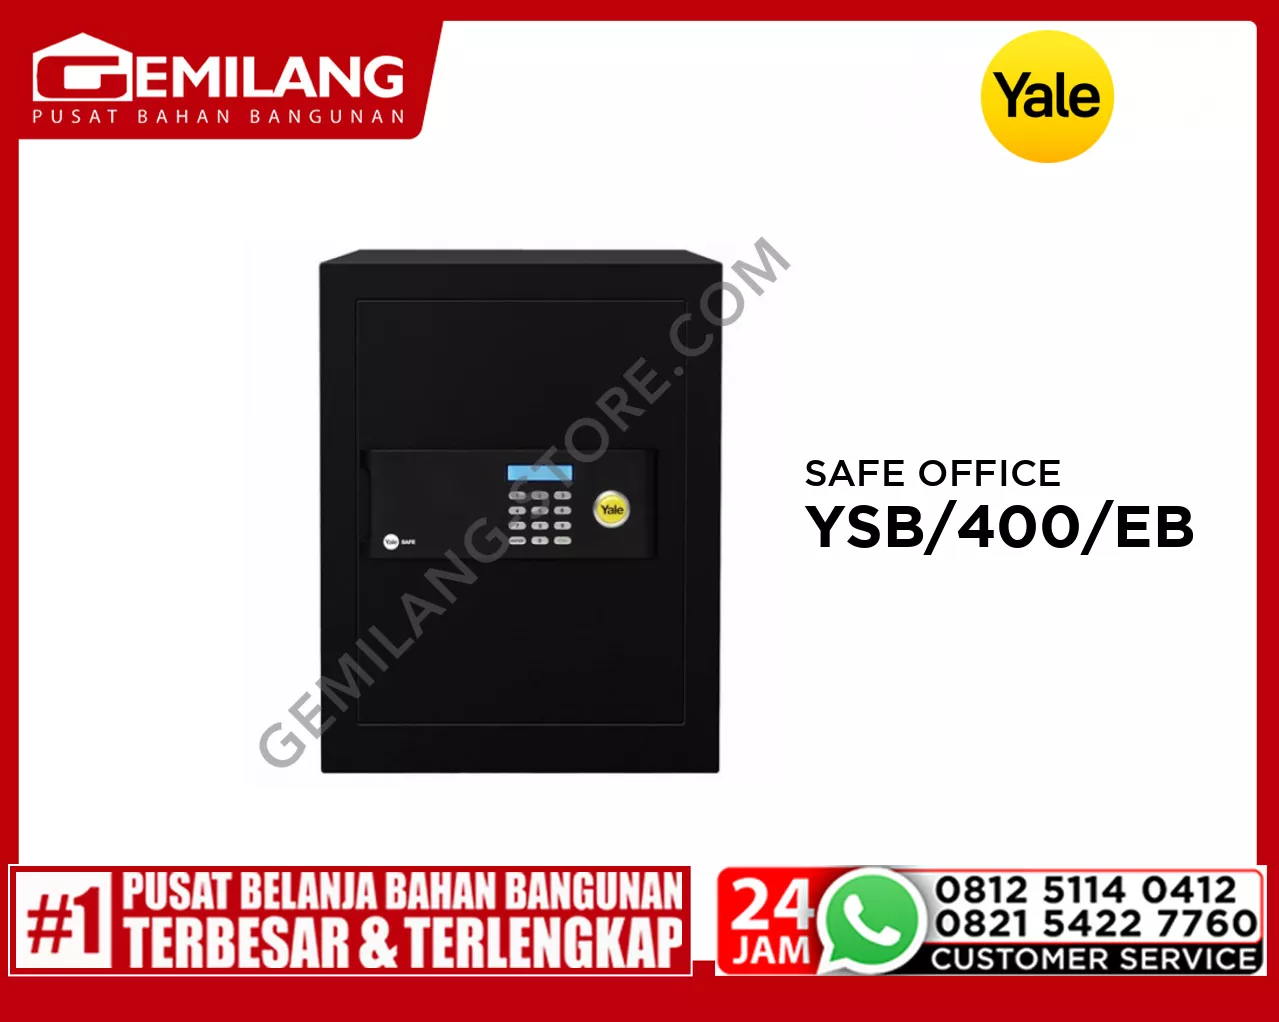 YALE SAFE OFFICE BLACK YSB/400/EB/1